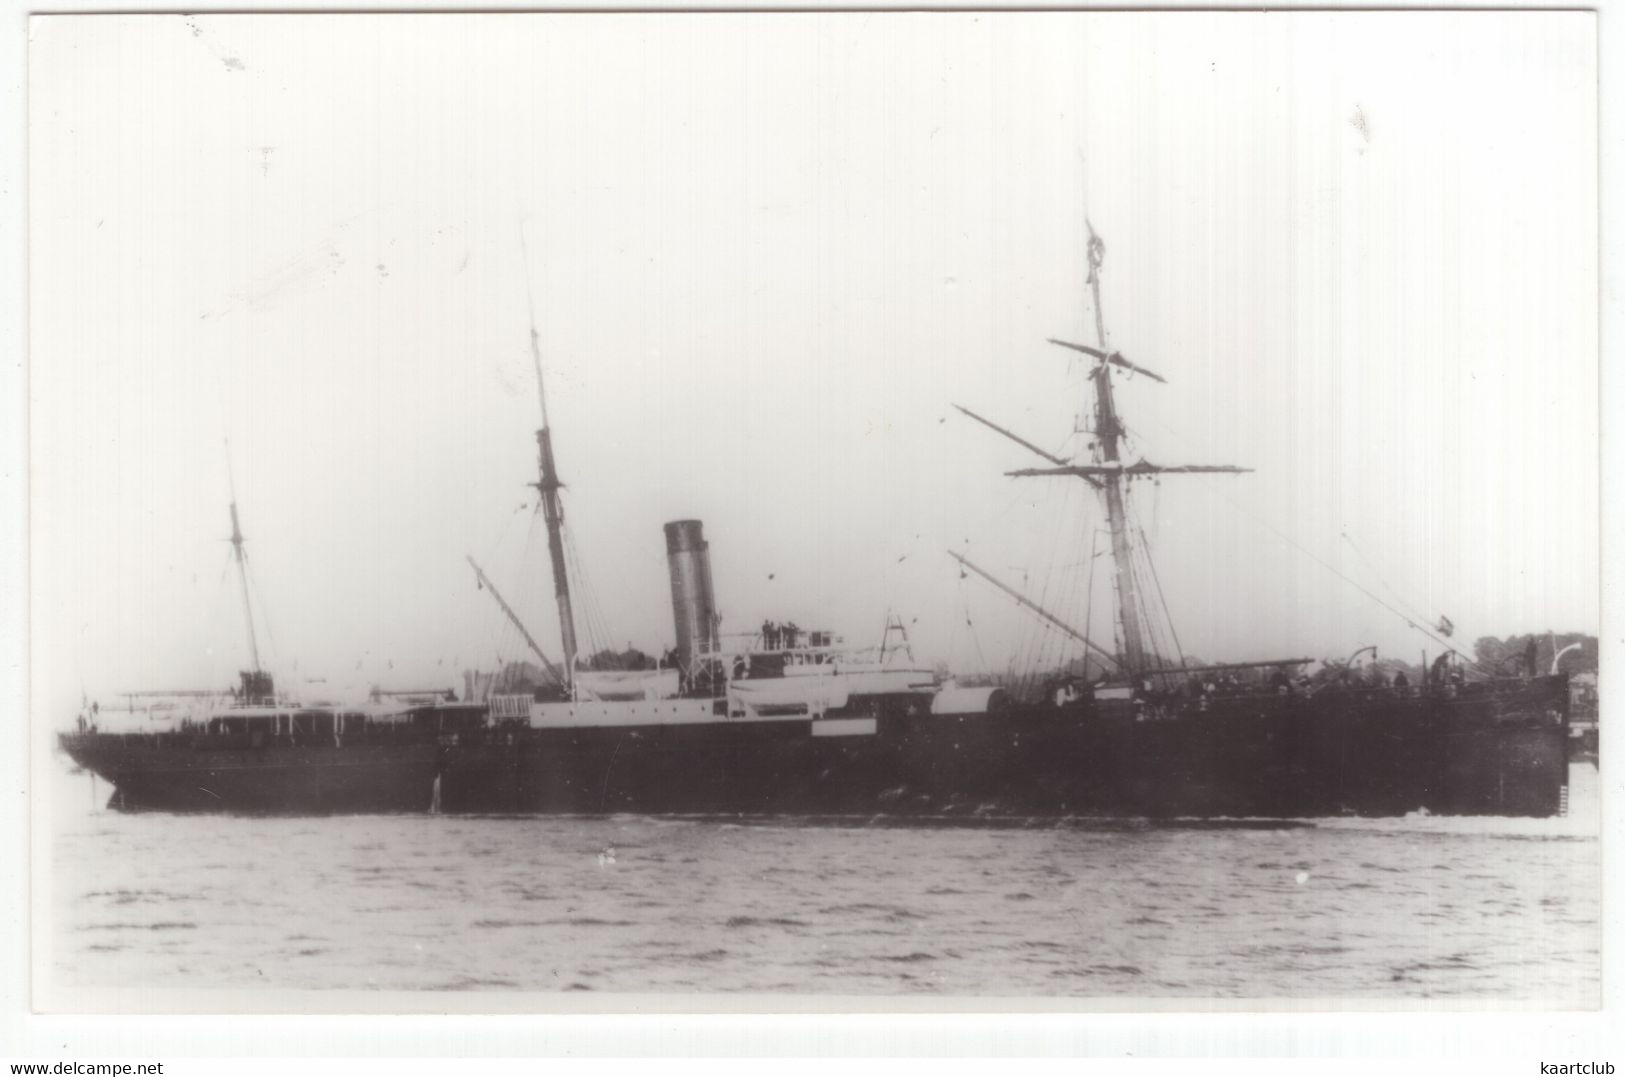 MS 'CONRAD' - 1872 - Passenger-/cargo Vessel - Steamer - Bateaux